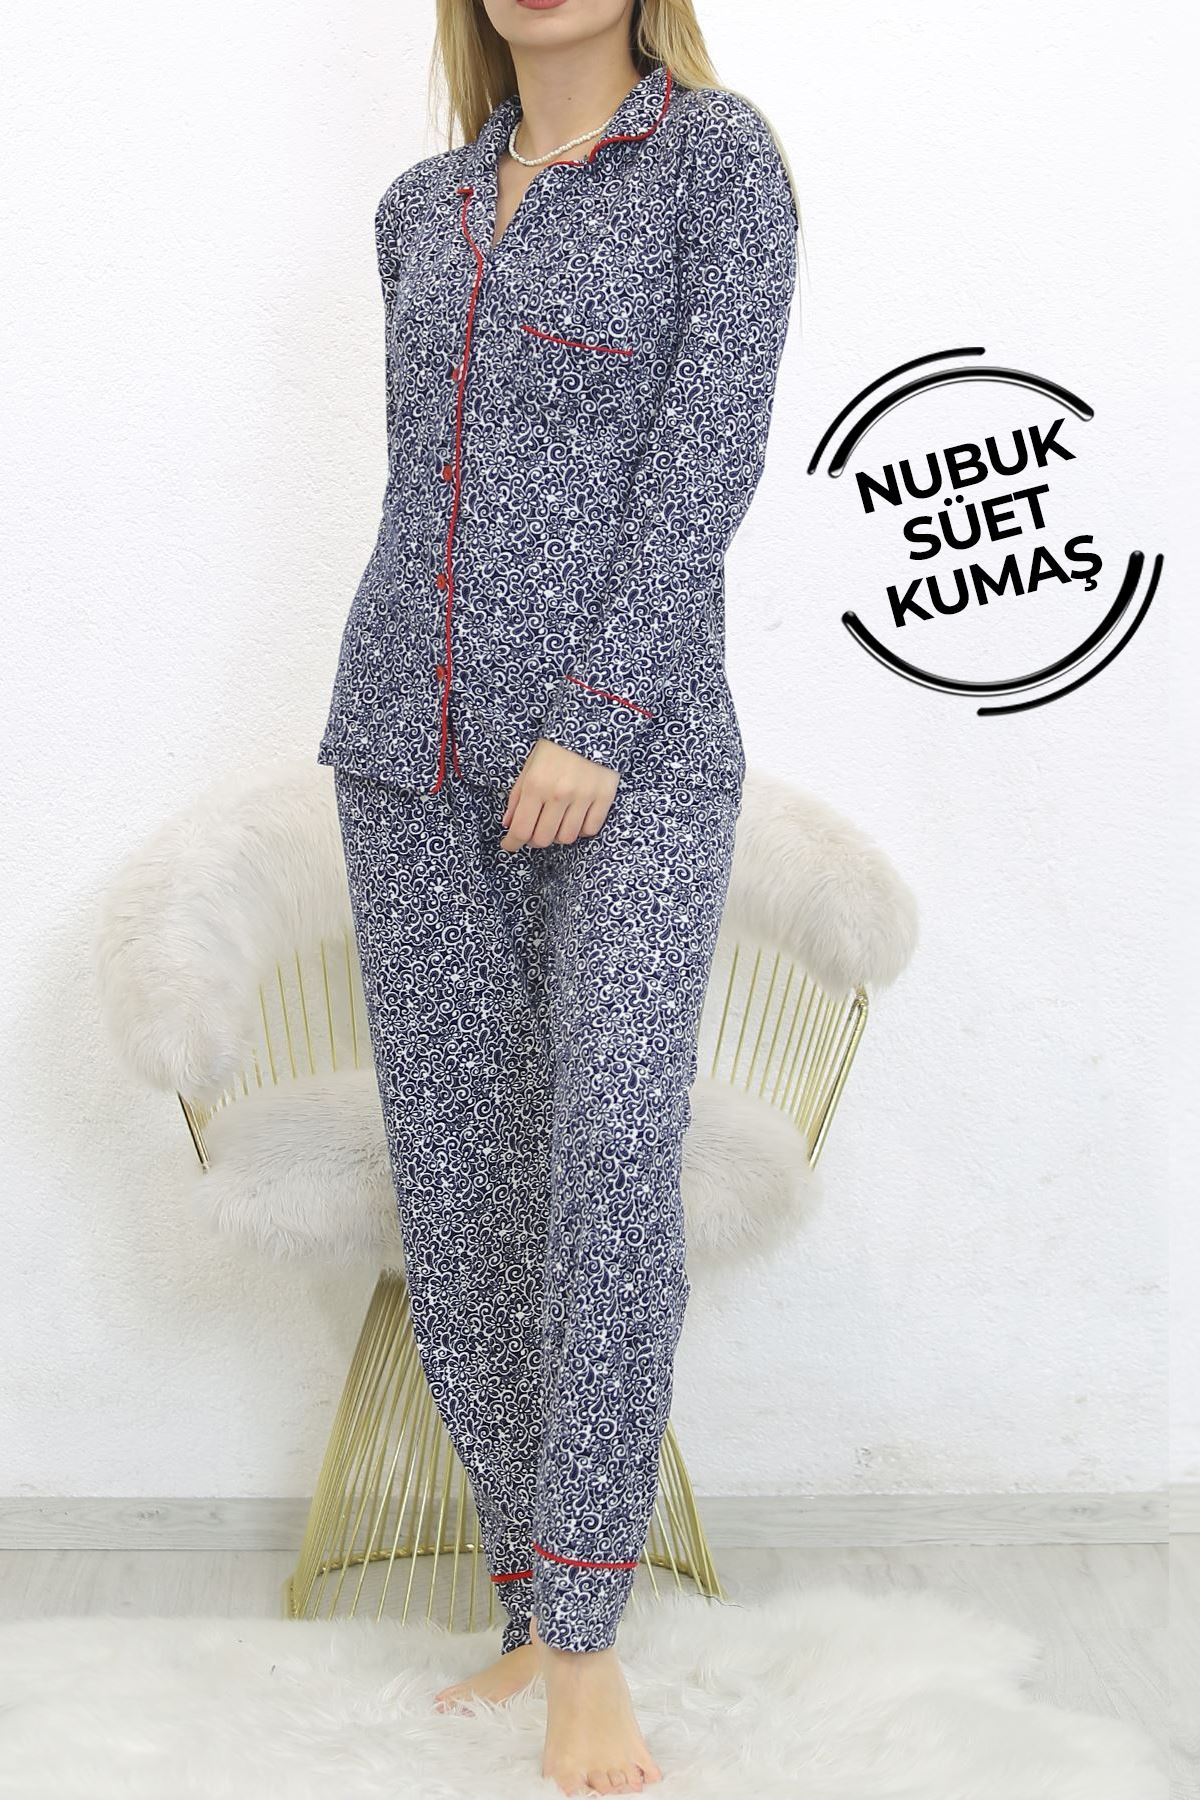 Nubuk Süet Pijama Takımı Lacikırmızı2 - 8529.1048.